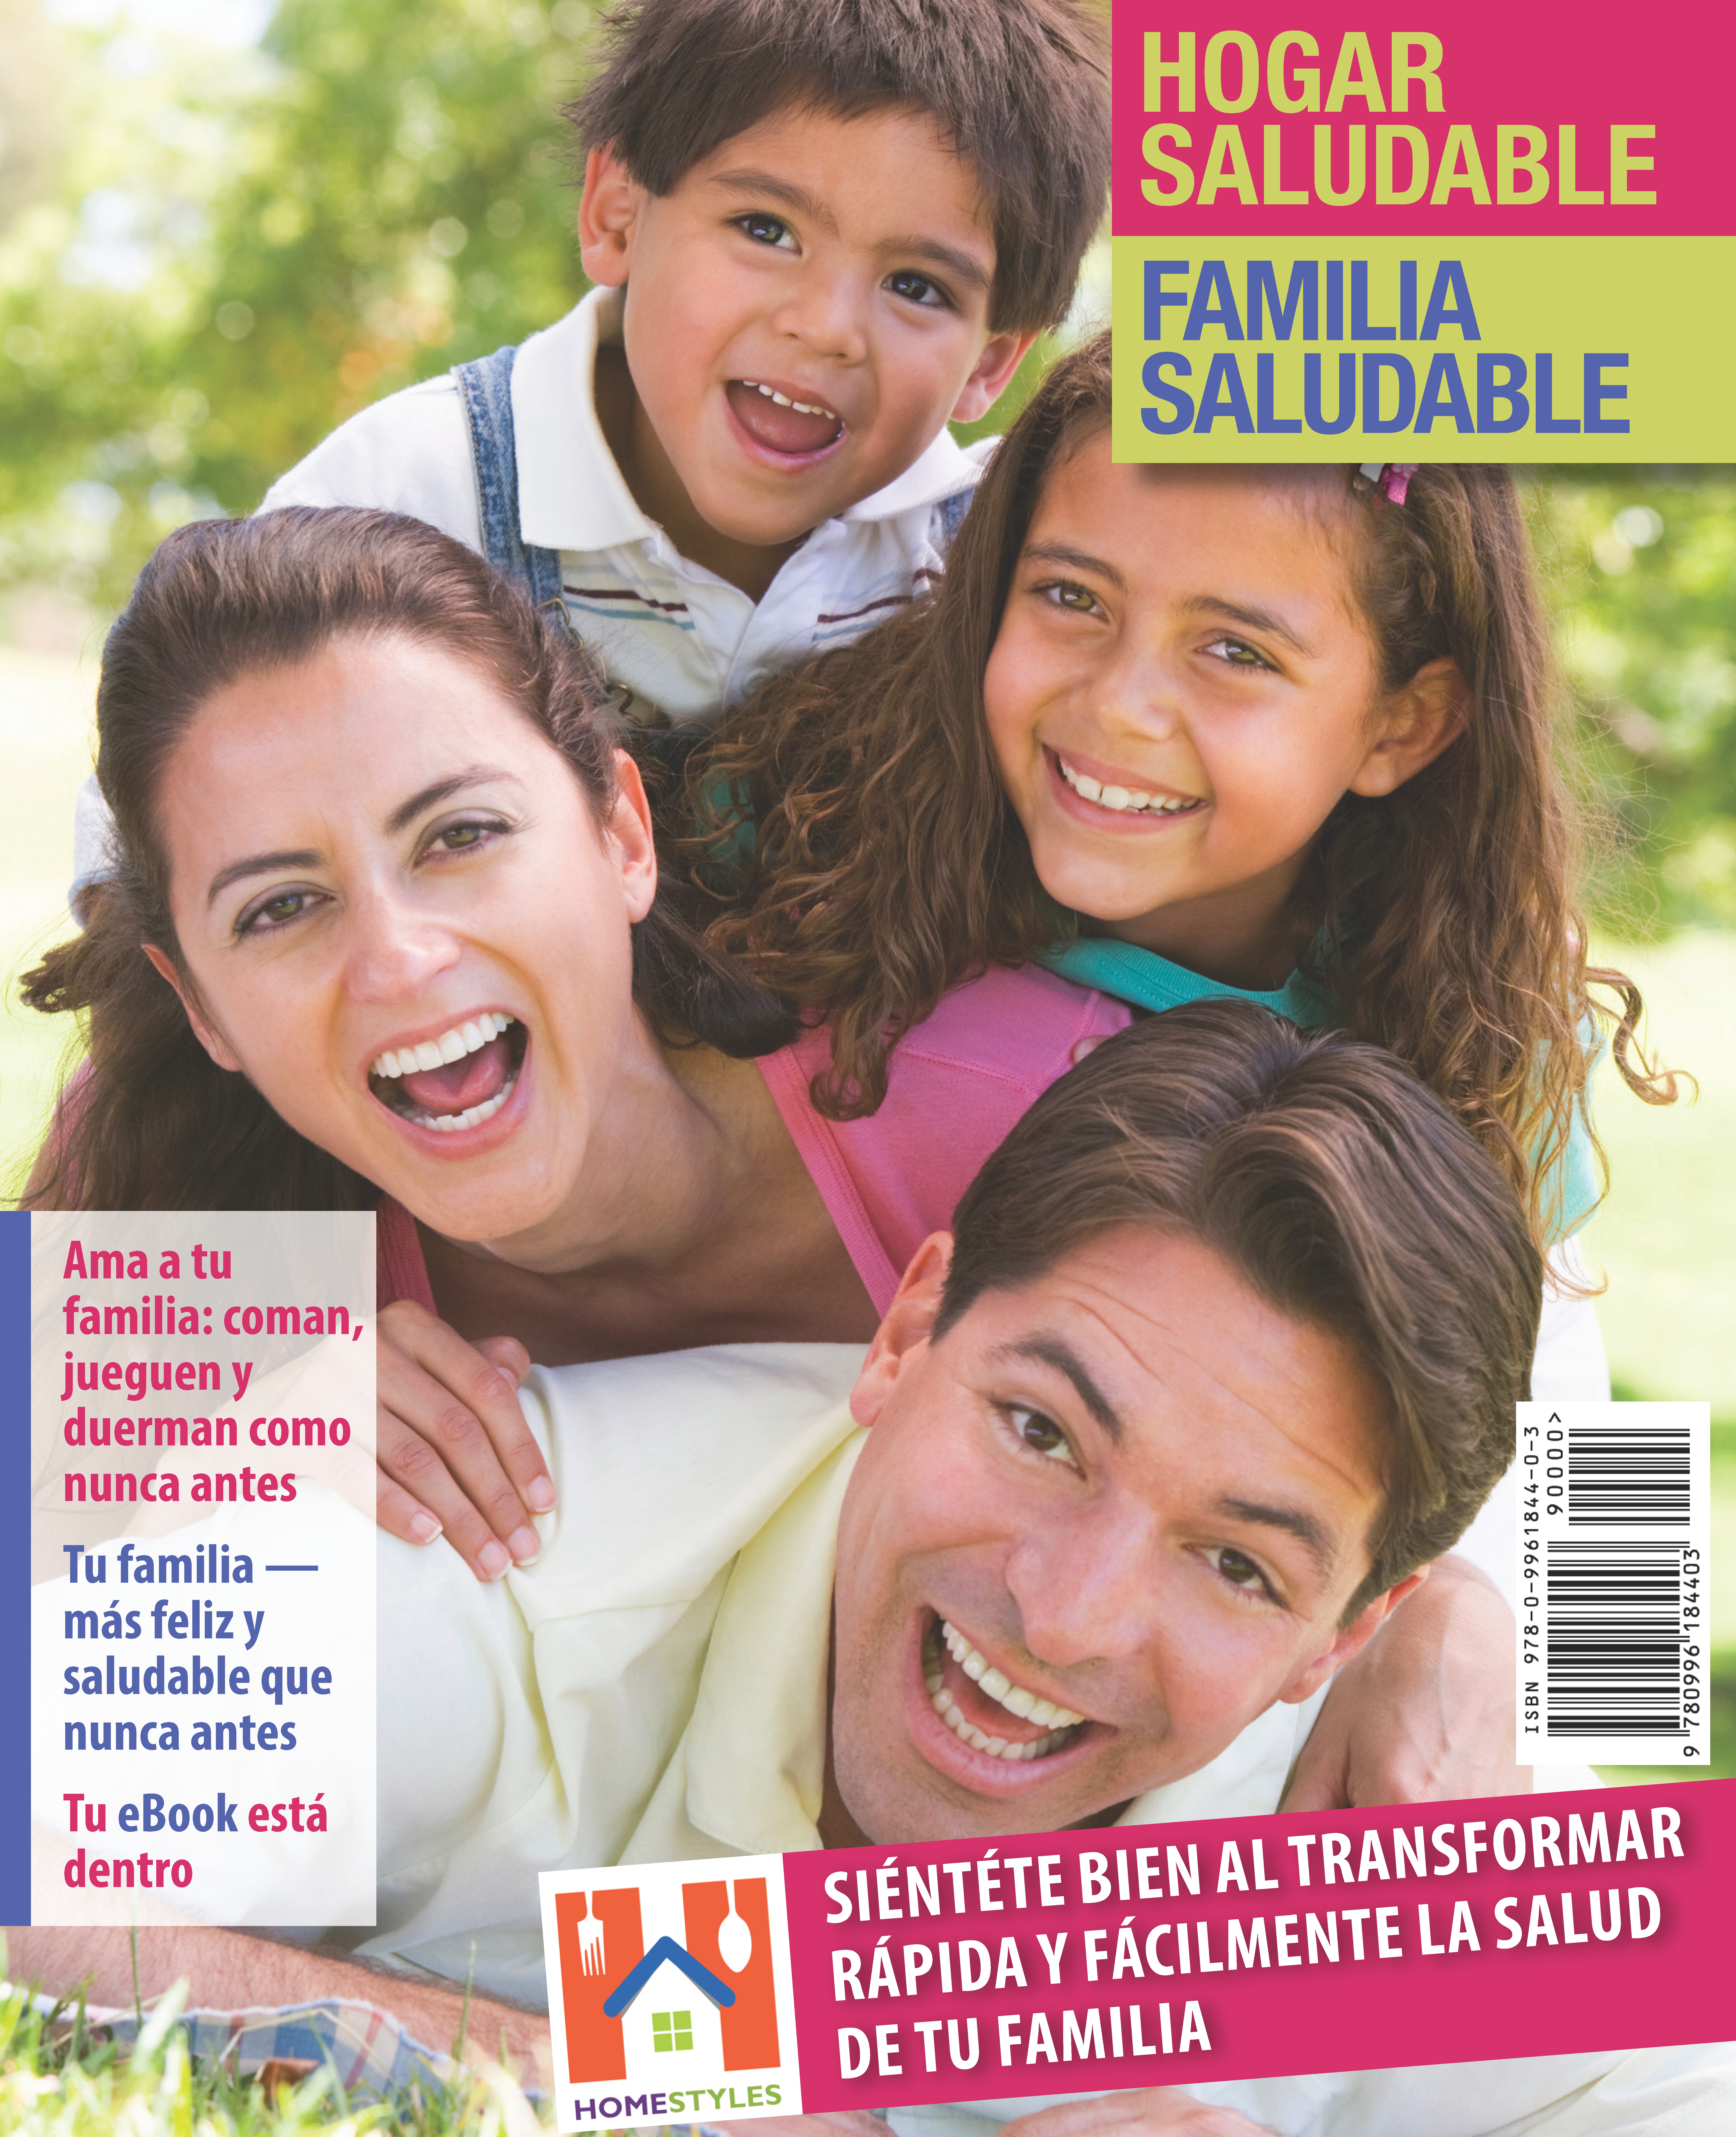 Hogar Saludable Familia Saludable magazine cover